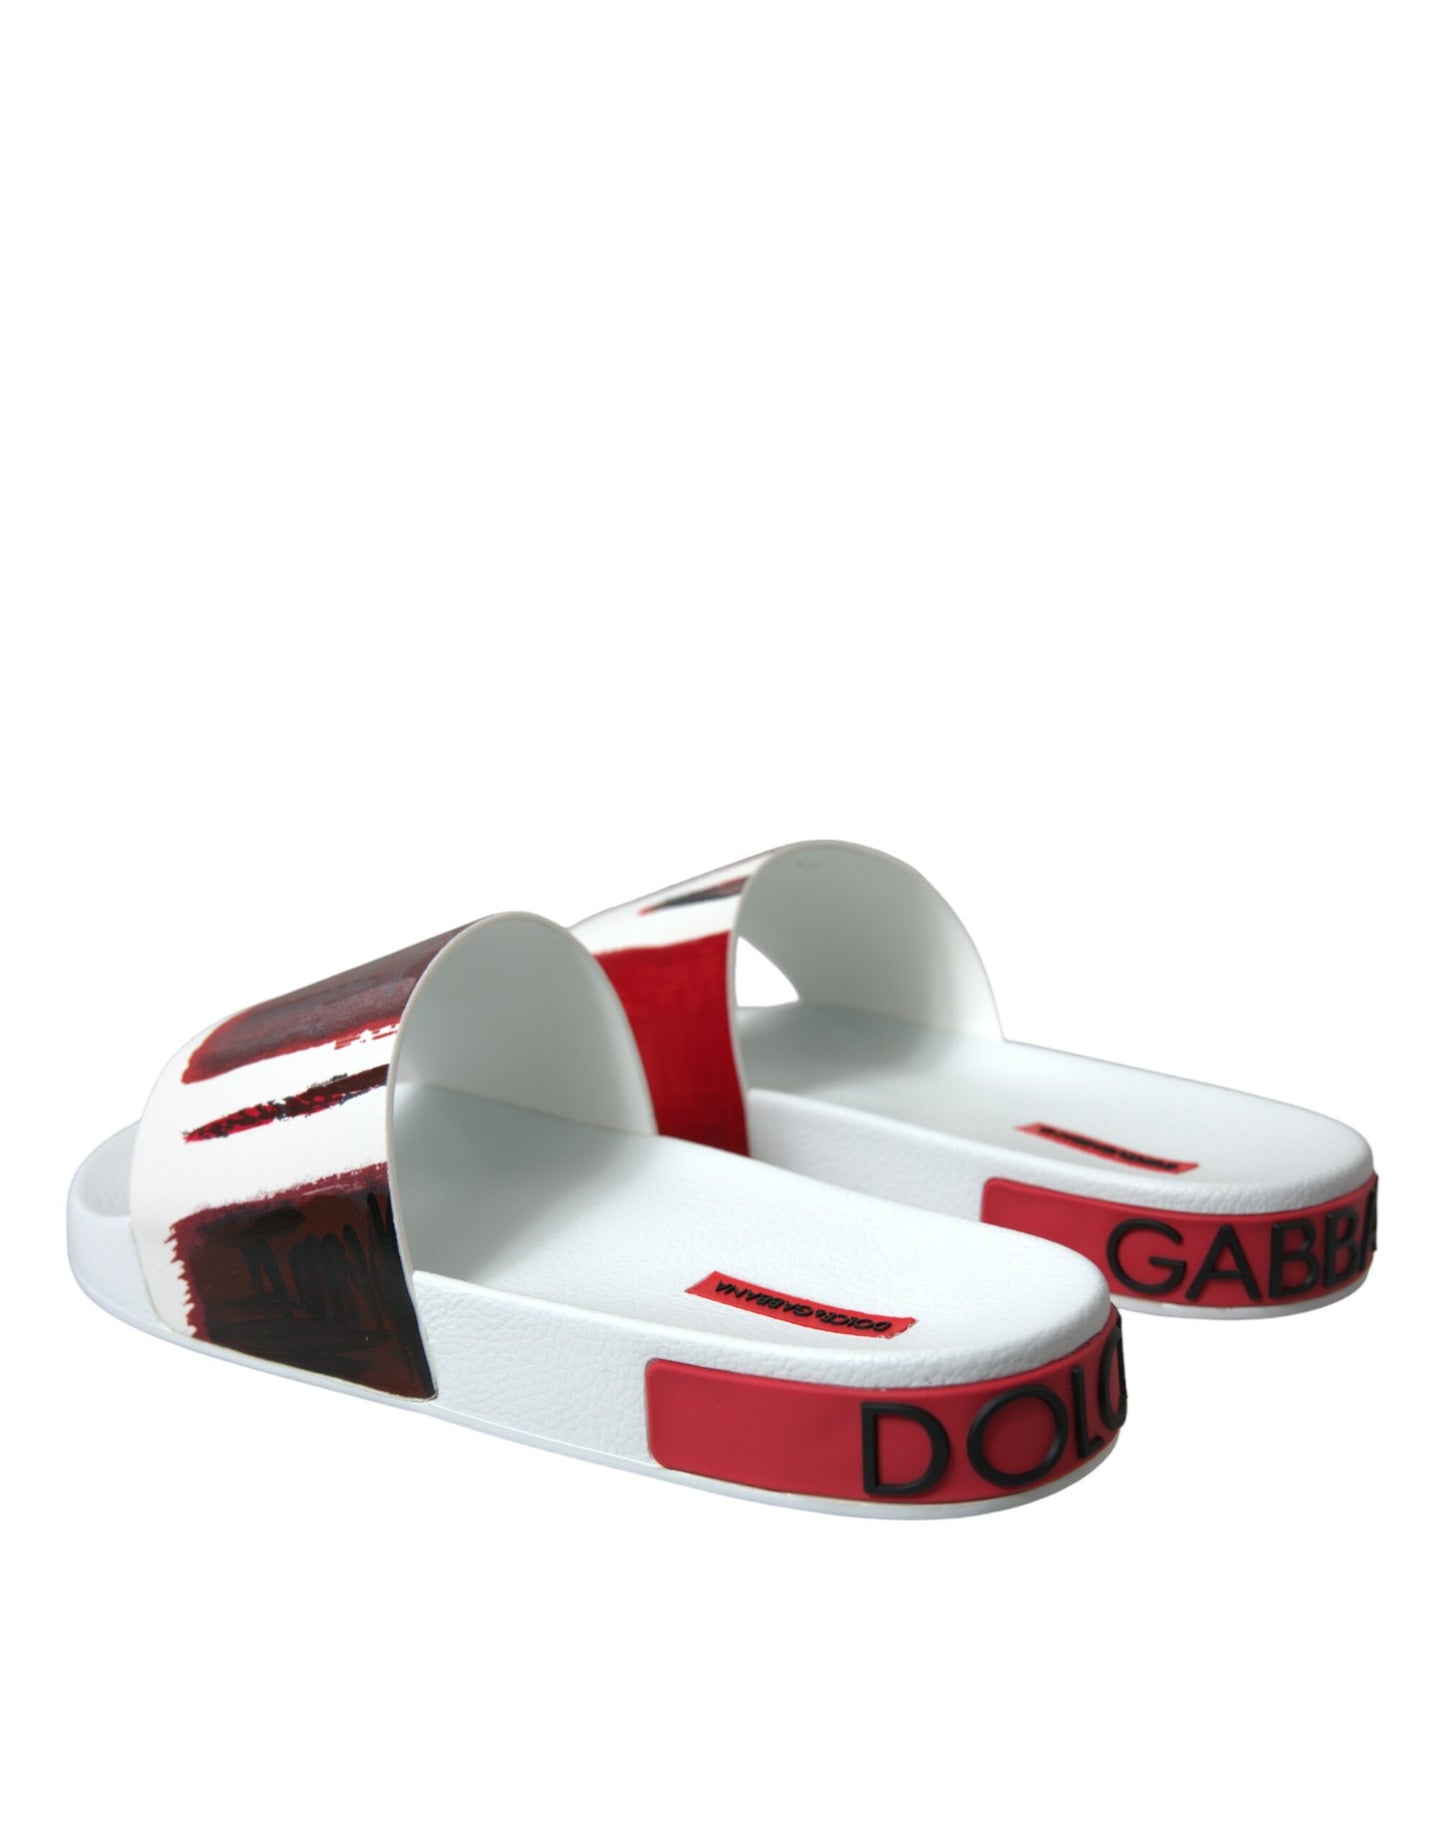 Dolce & Gabbana Chic White & Red Leather Mens Slides Sandals